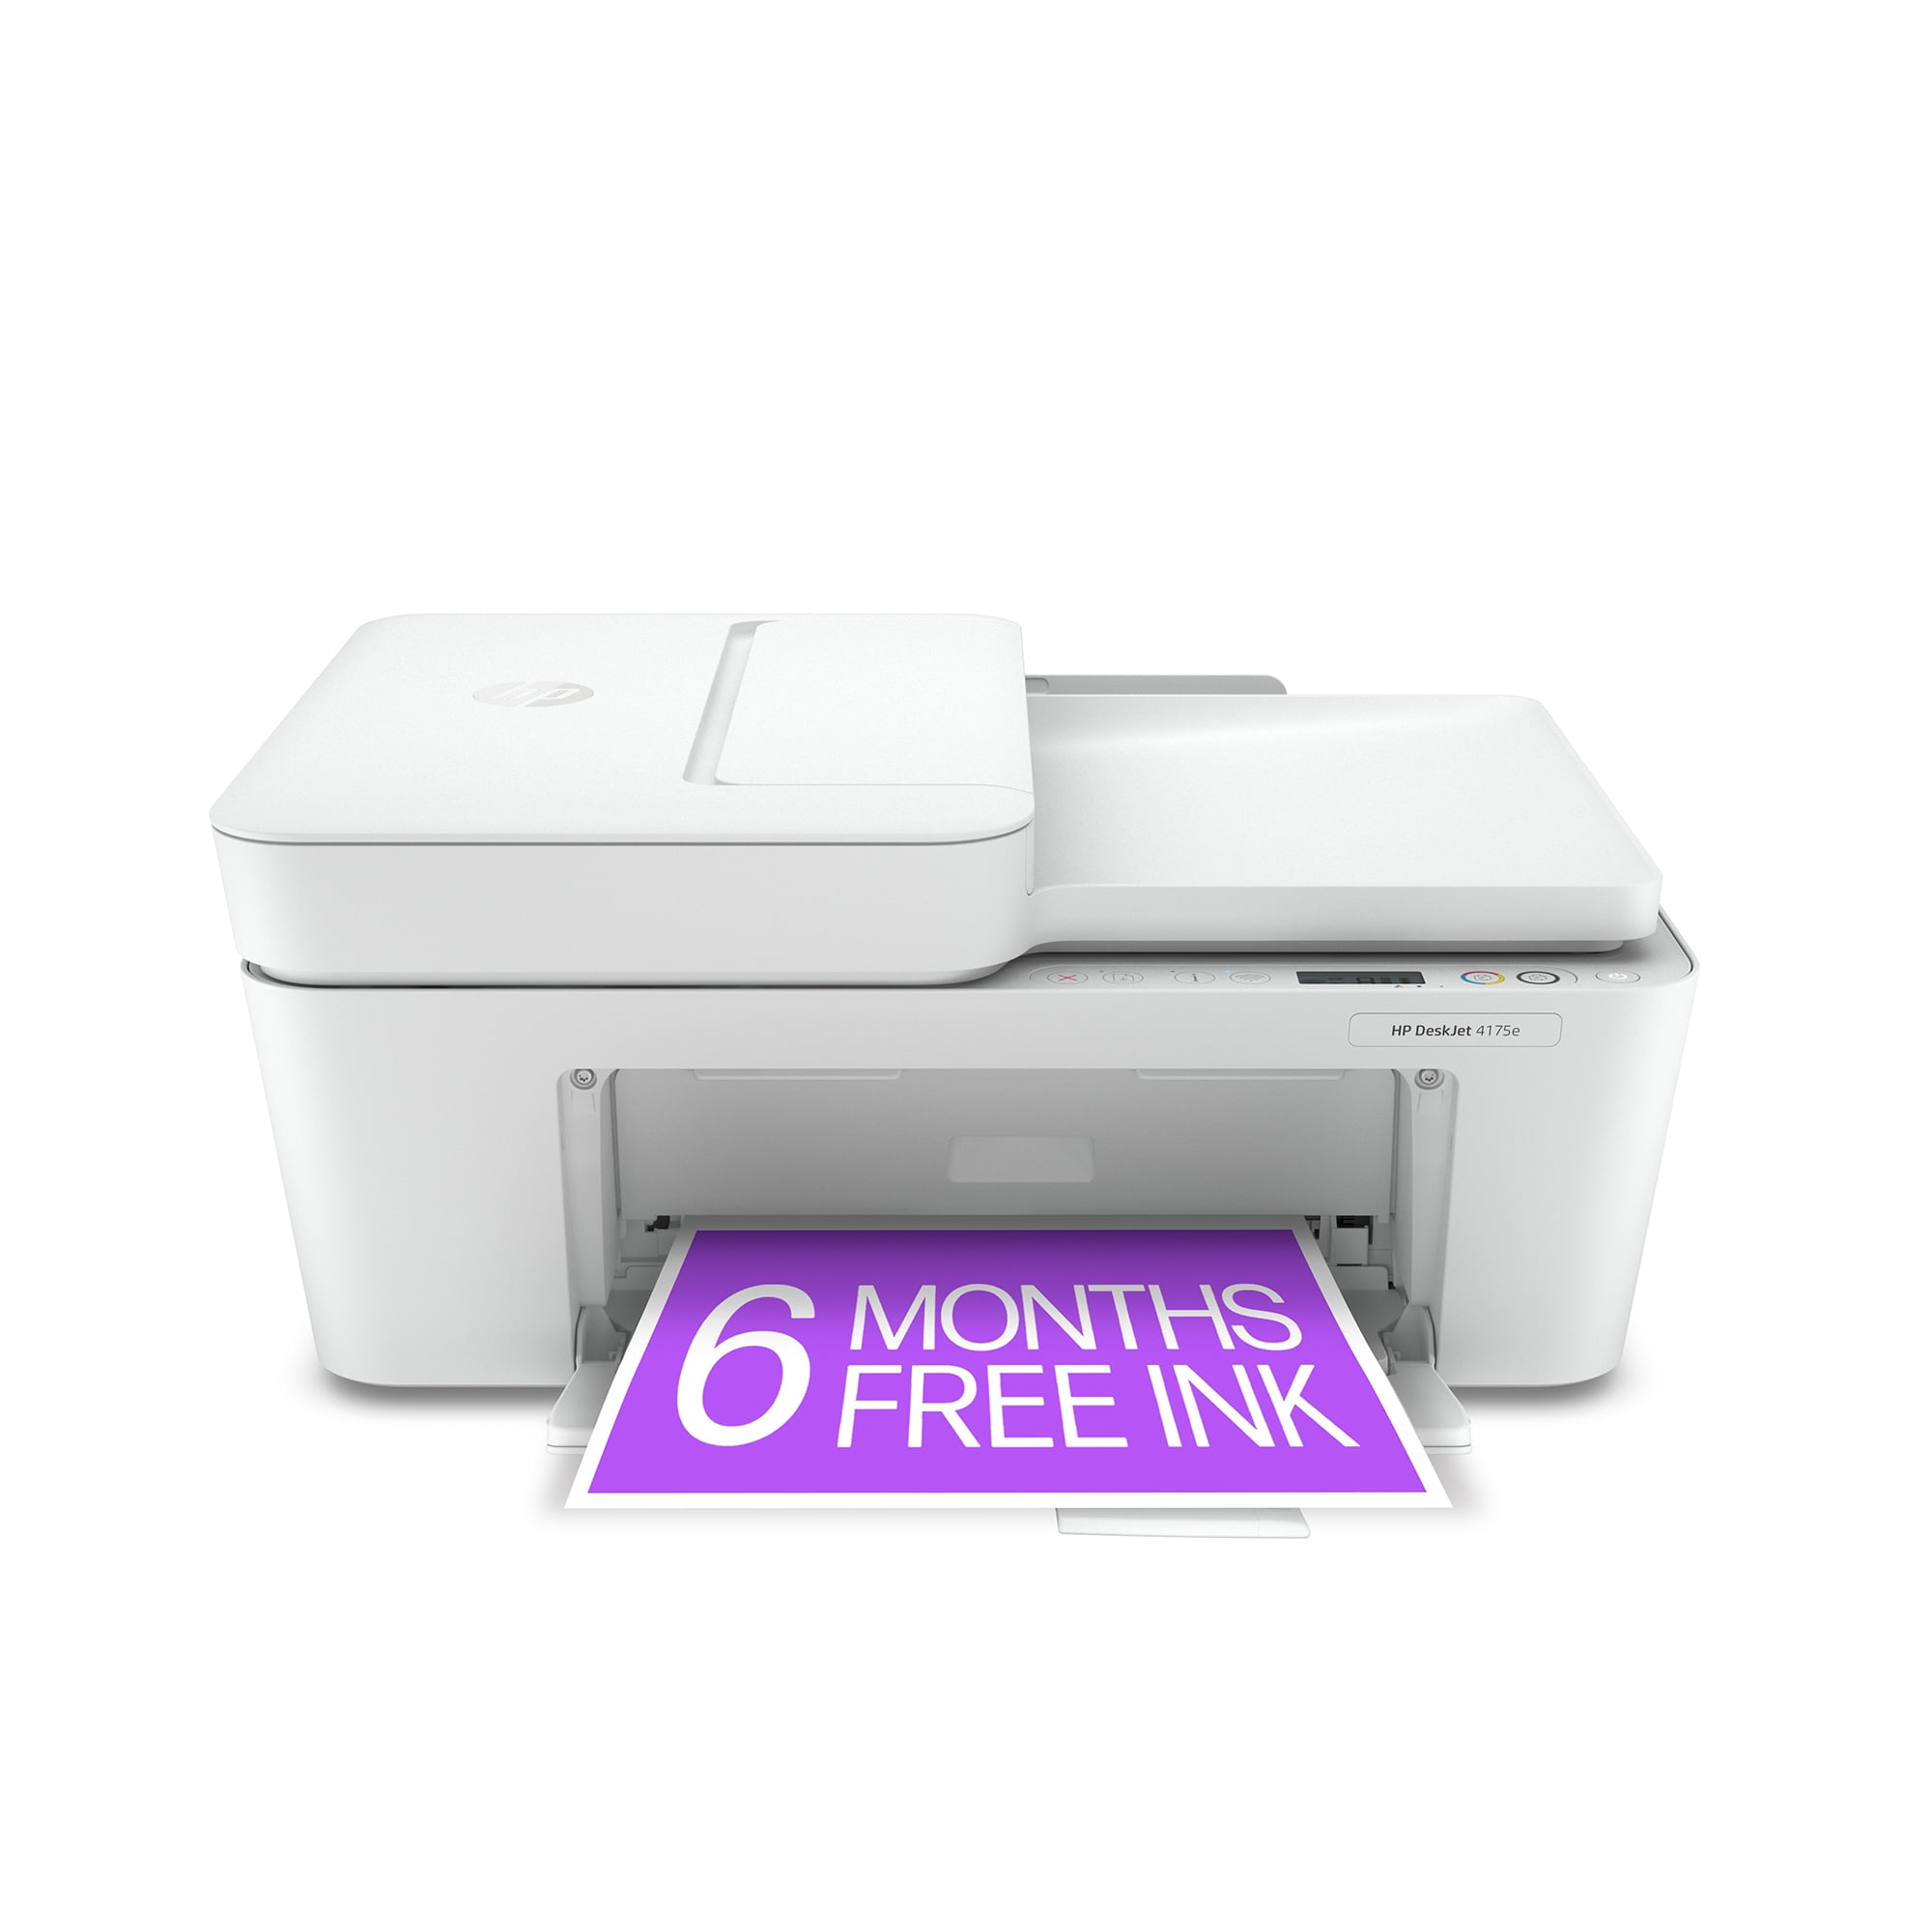 HP DeskJet 3772 All-in-One Wireless Color Inkjet Printer, 6 Months